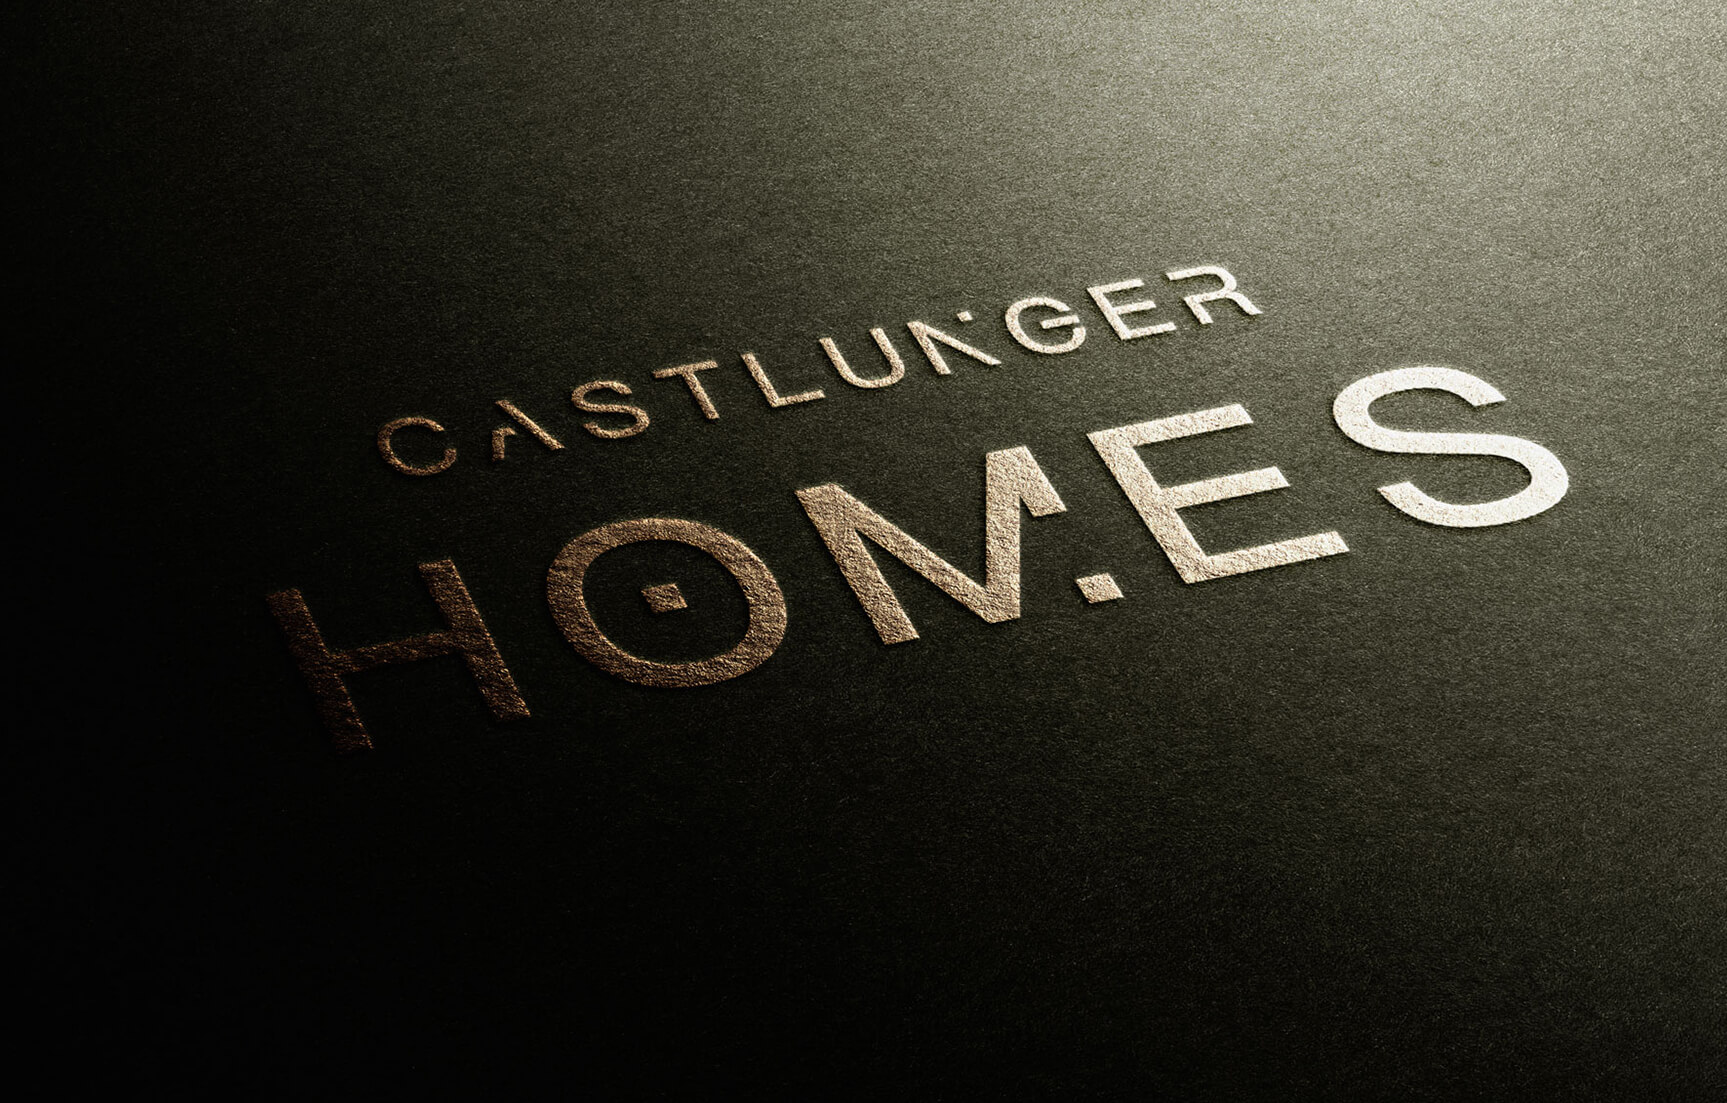 Castlunger Homes – Creators of fine living